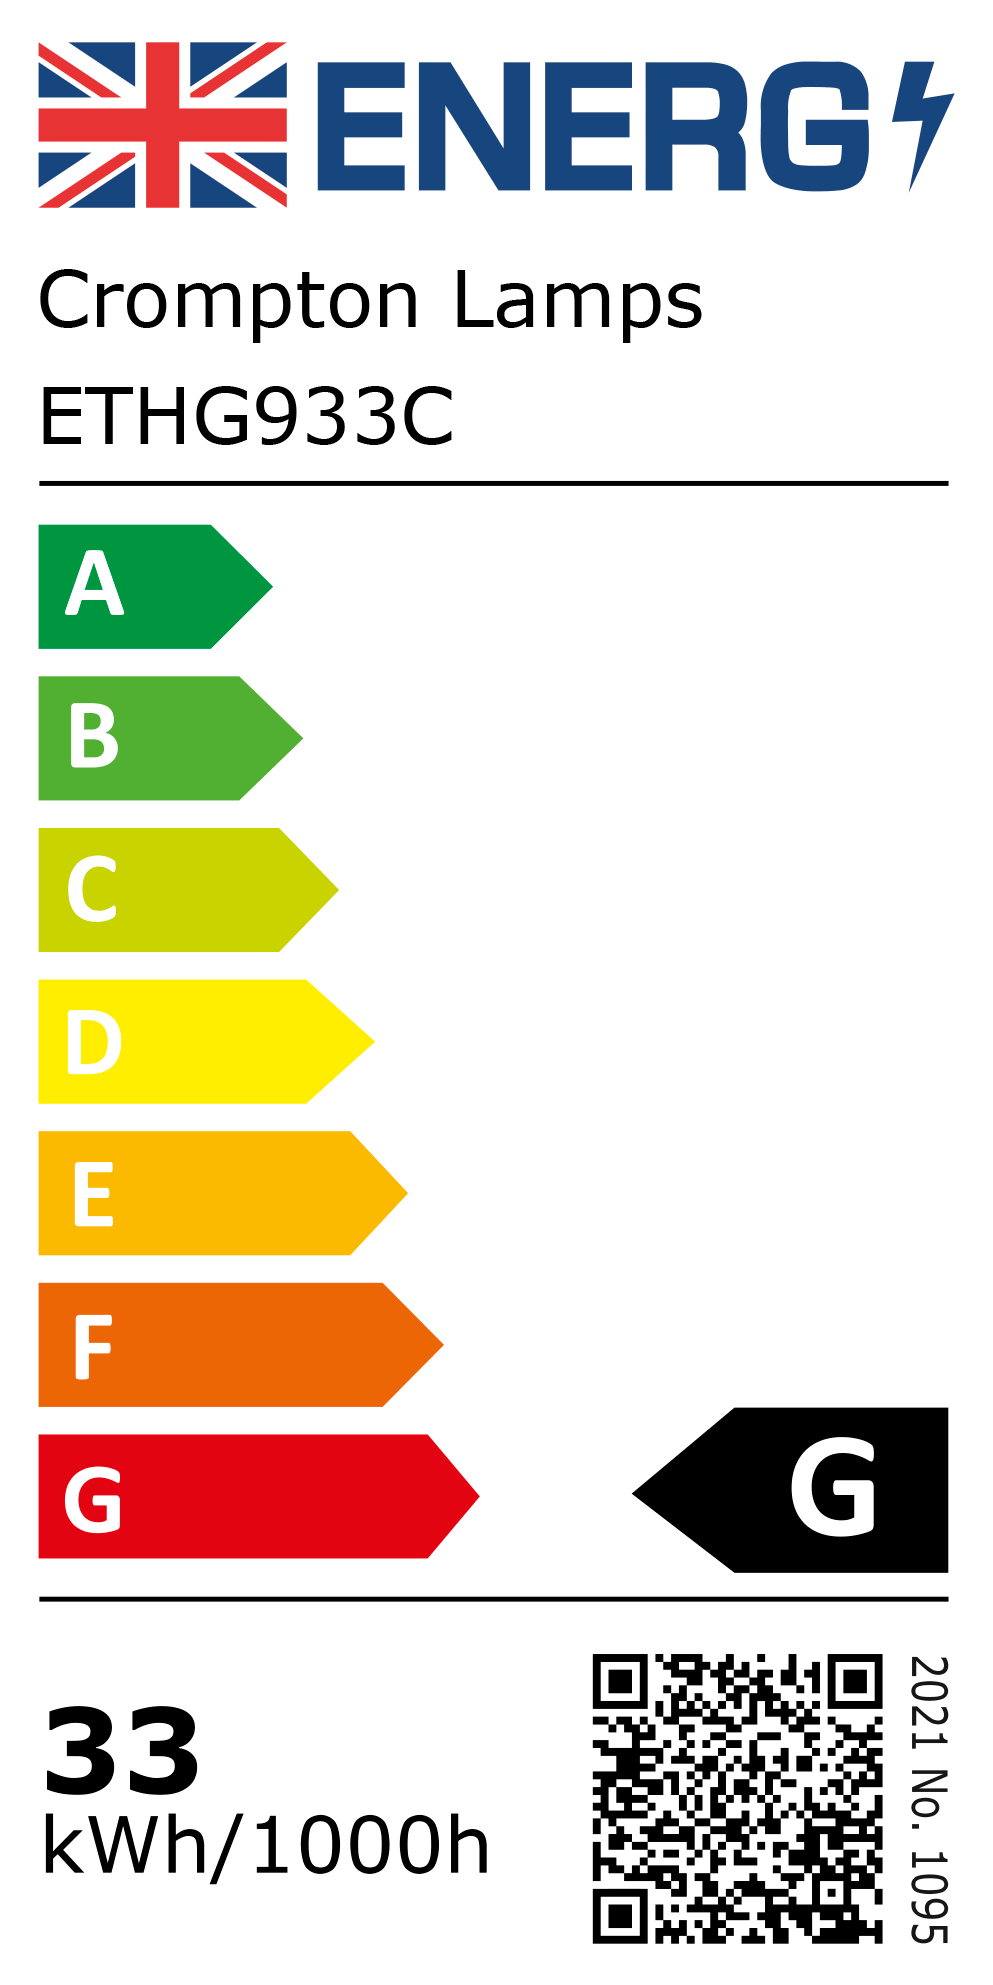 New 2021 Energy Rating Label: Stock Code ETHG933C